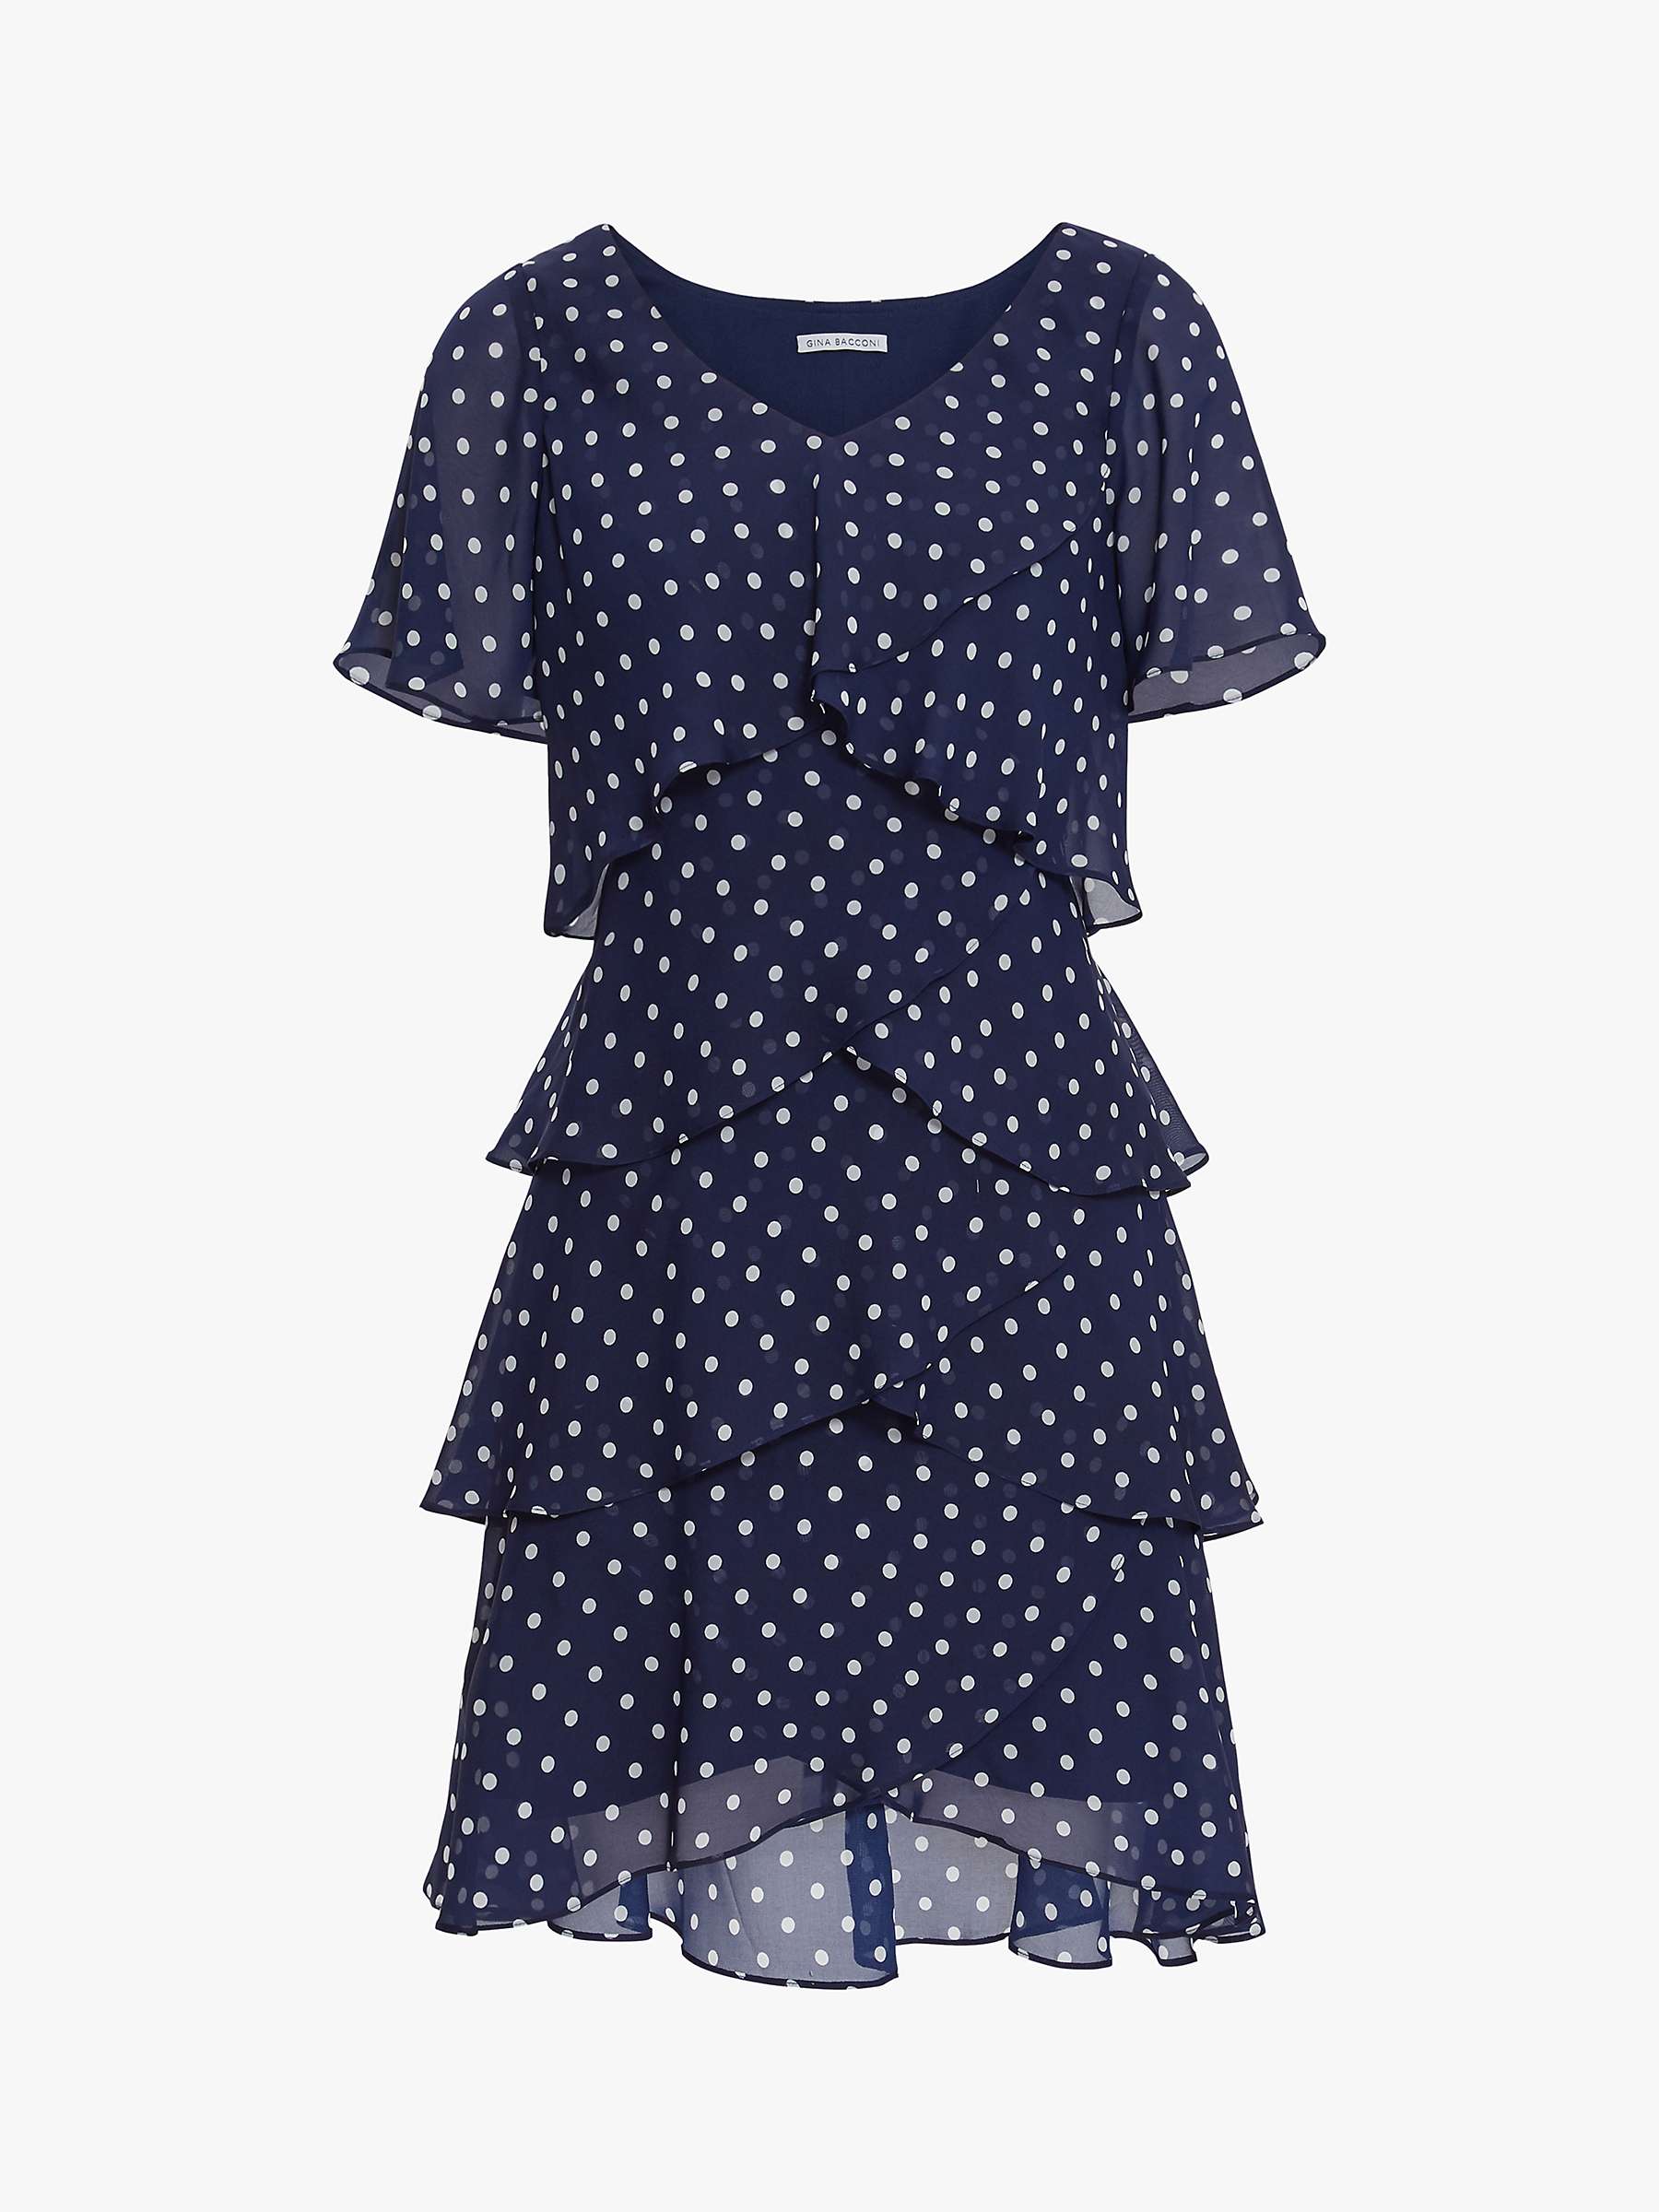 Buy Gina Bacconi Loxie Ruffle Polka Dot Dress, Navy Online at johnlewis.com